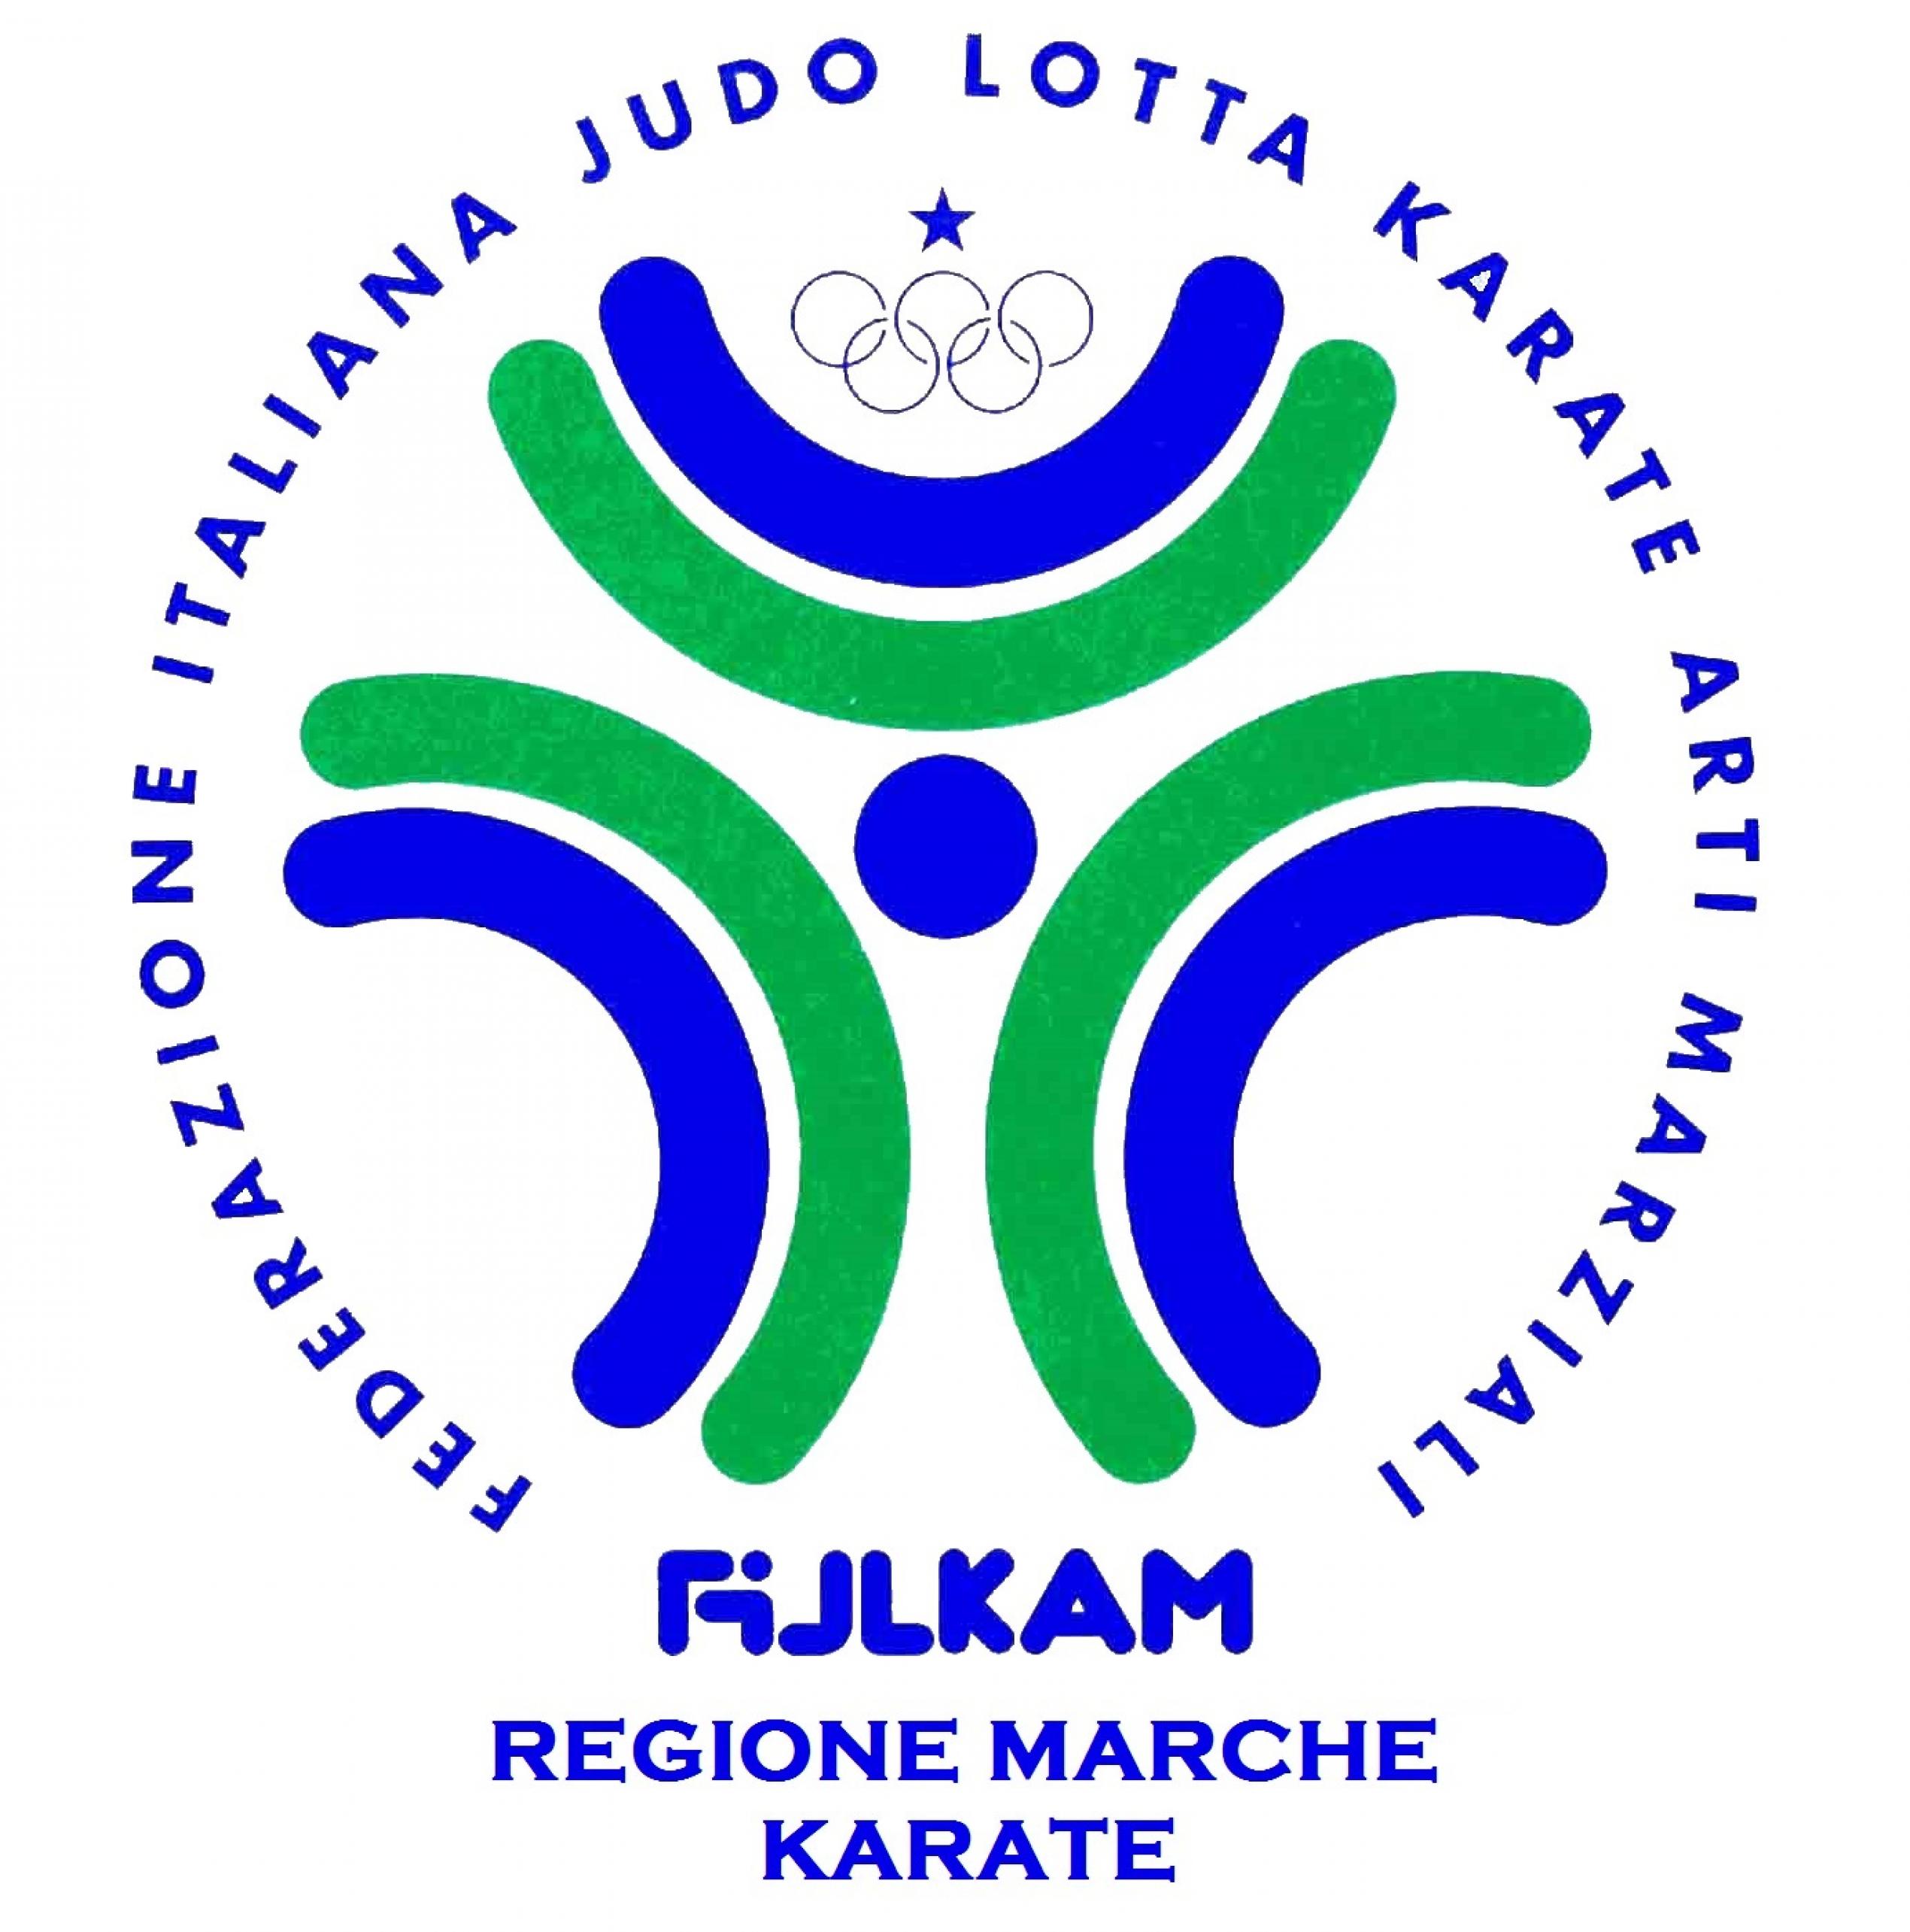 Riunione società sportive settore Karate 31.08.2021